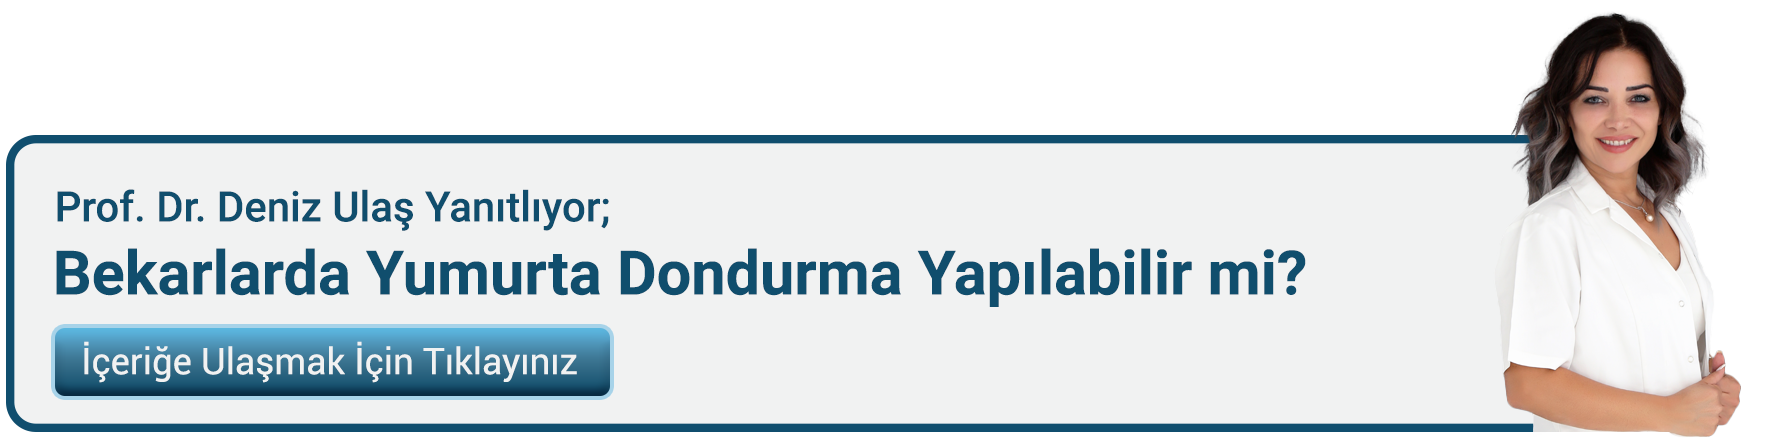 banner yumurtadondurma 1